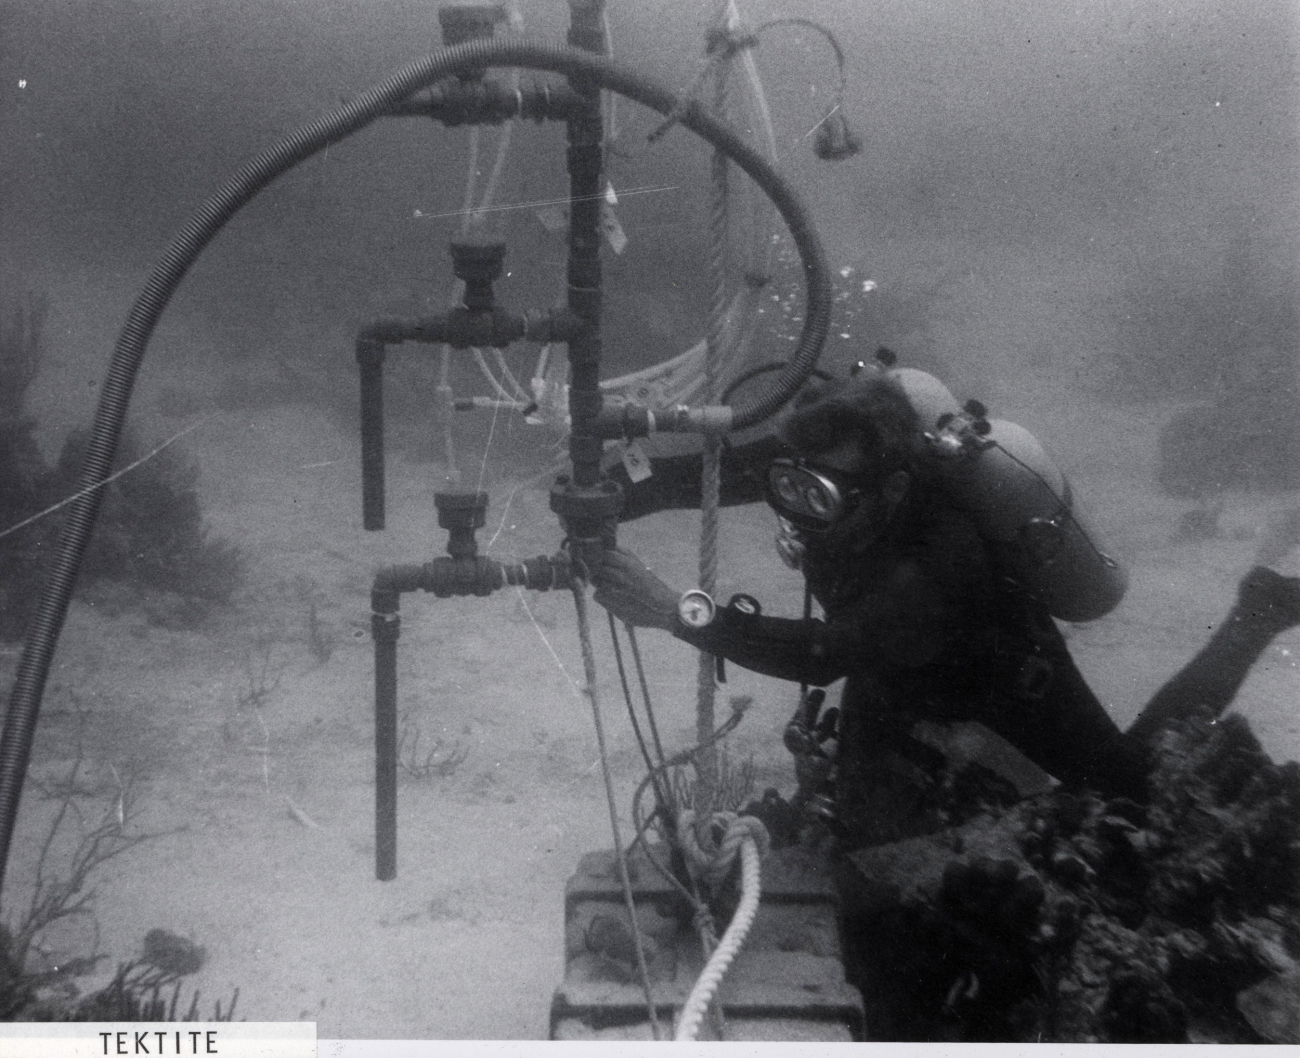 Tektite aquanaut working on experimental equipment